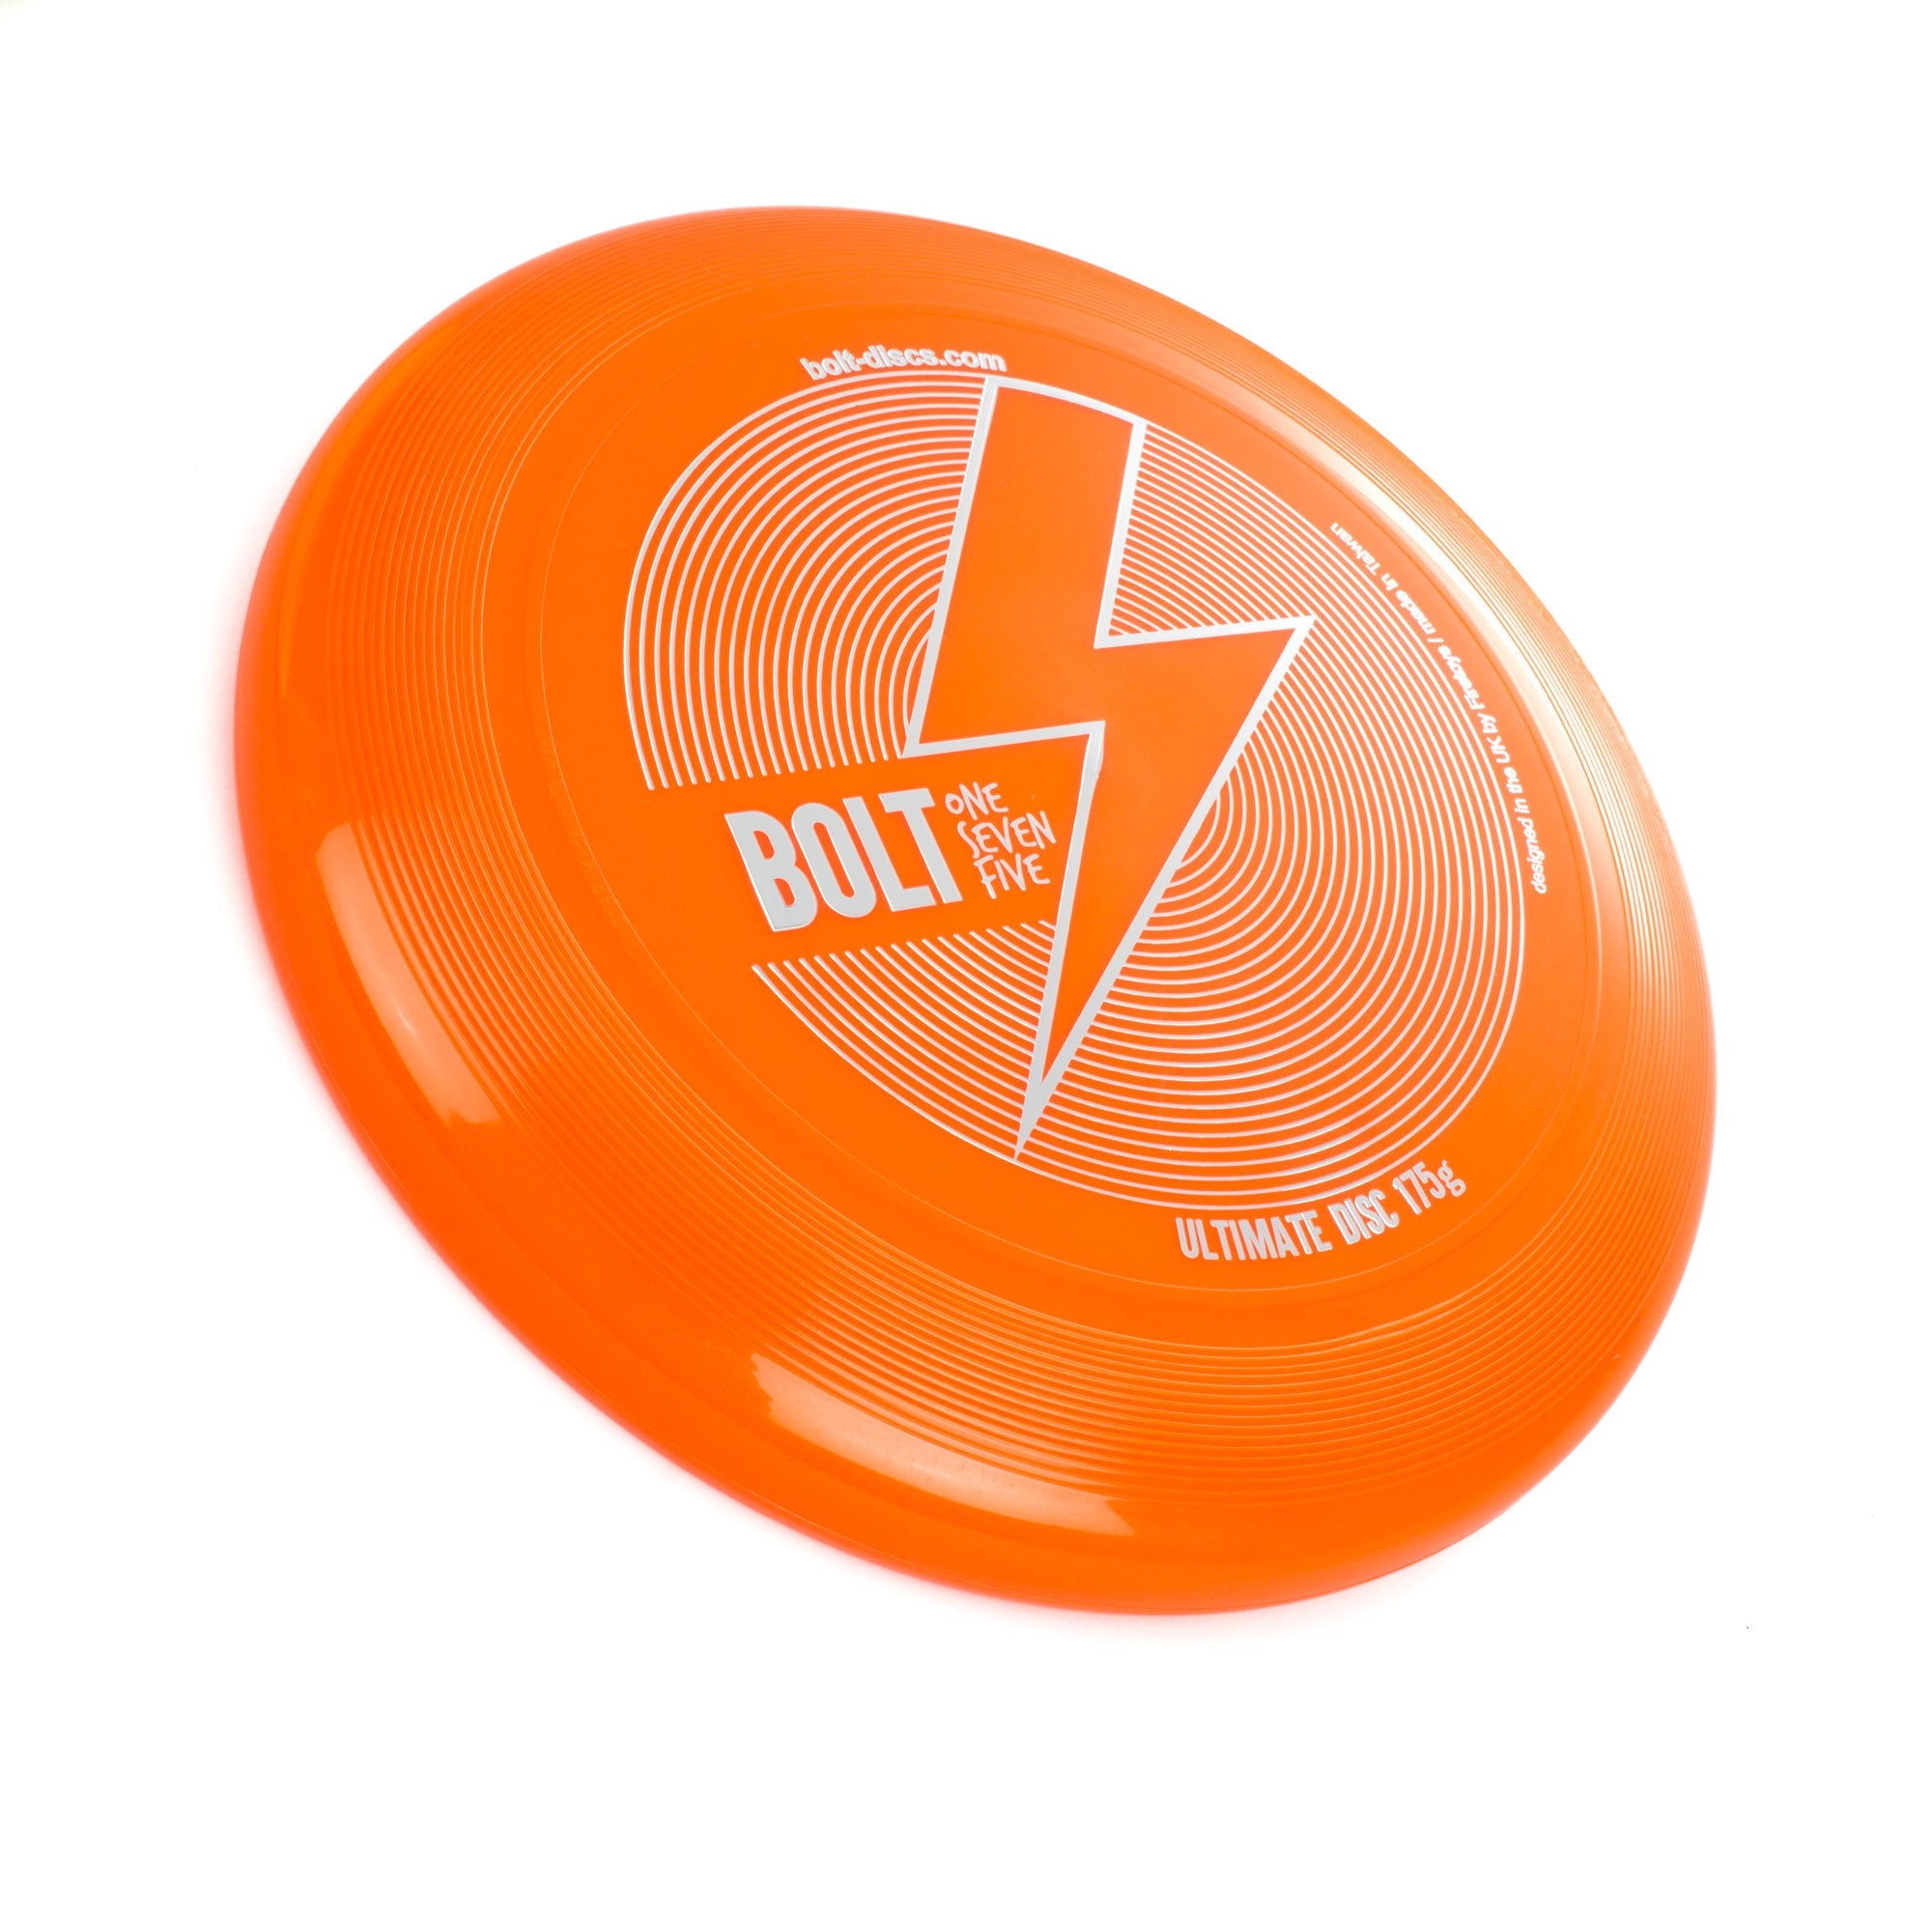 Orange BOLT frisbee at an angle